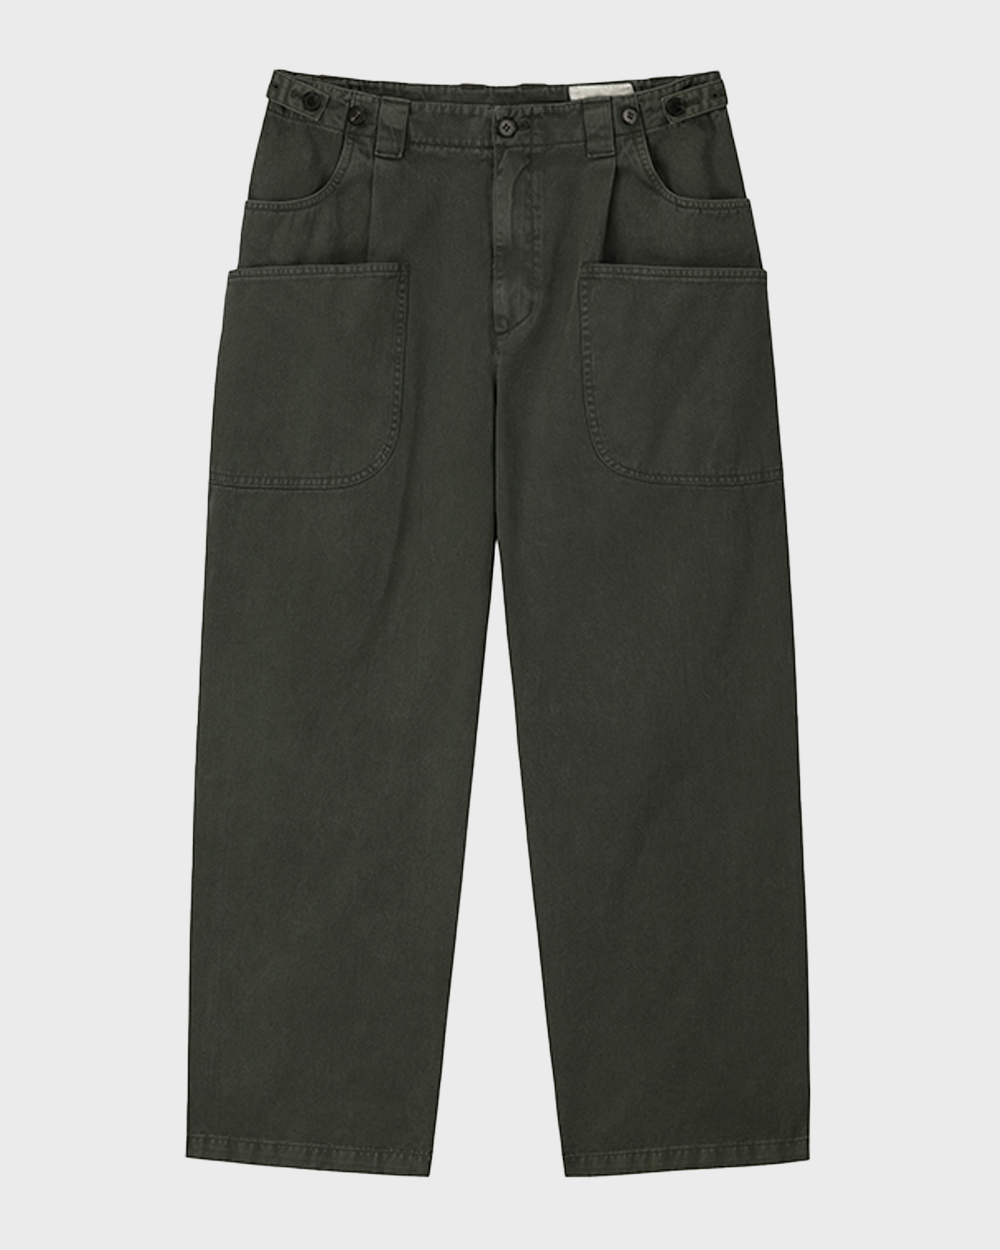 French Workwear Pants (Khaki)